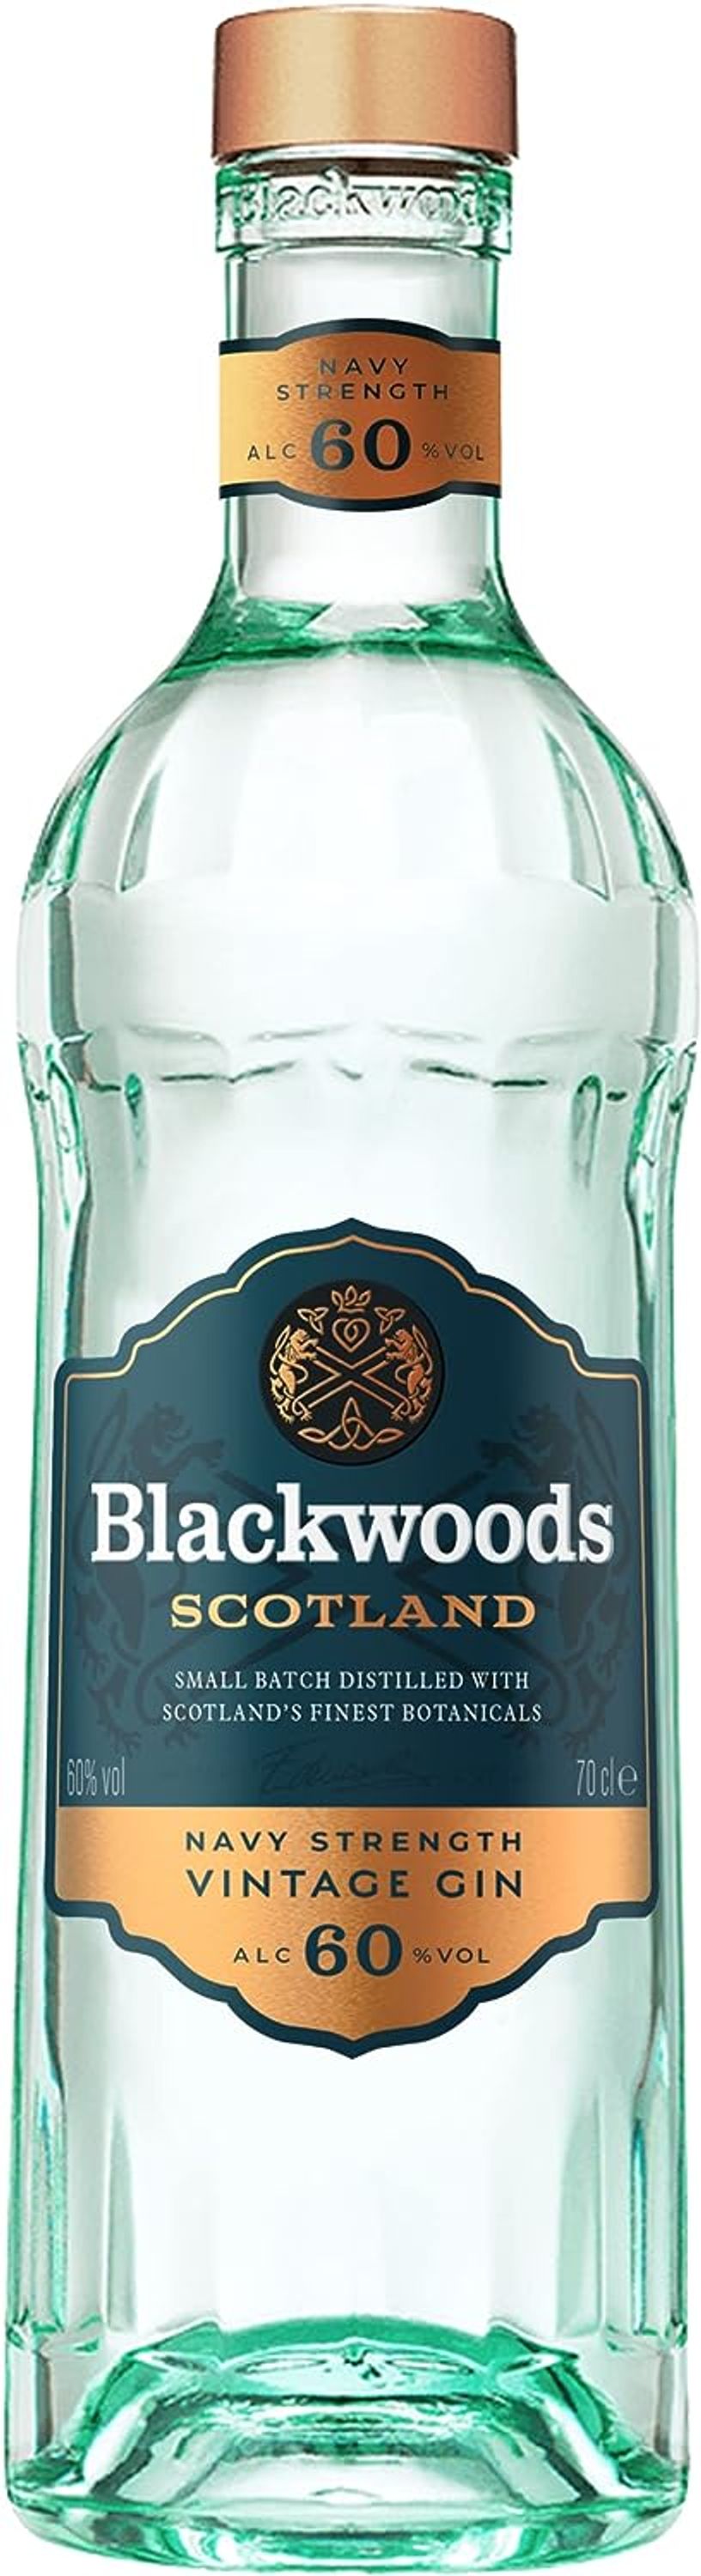 Blackwood's Vintage Gin Navy Strength 0,7l, alk. 60 % tilavuudesta